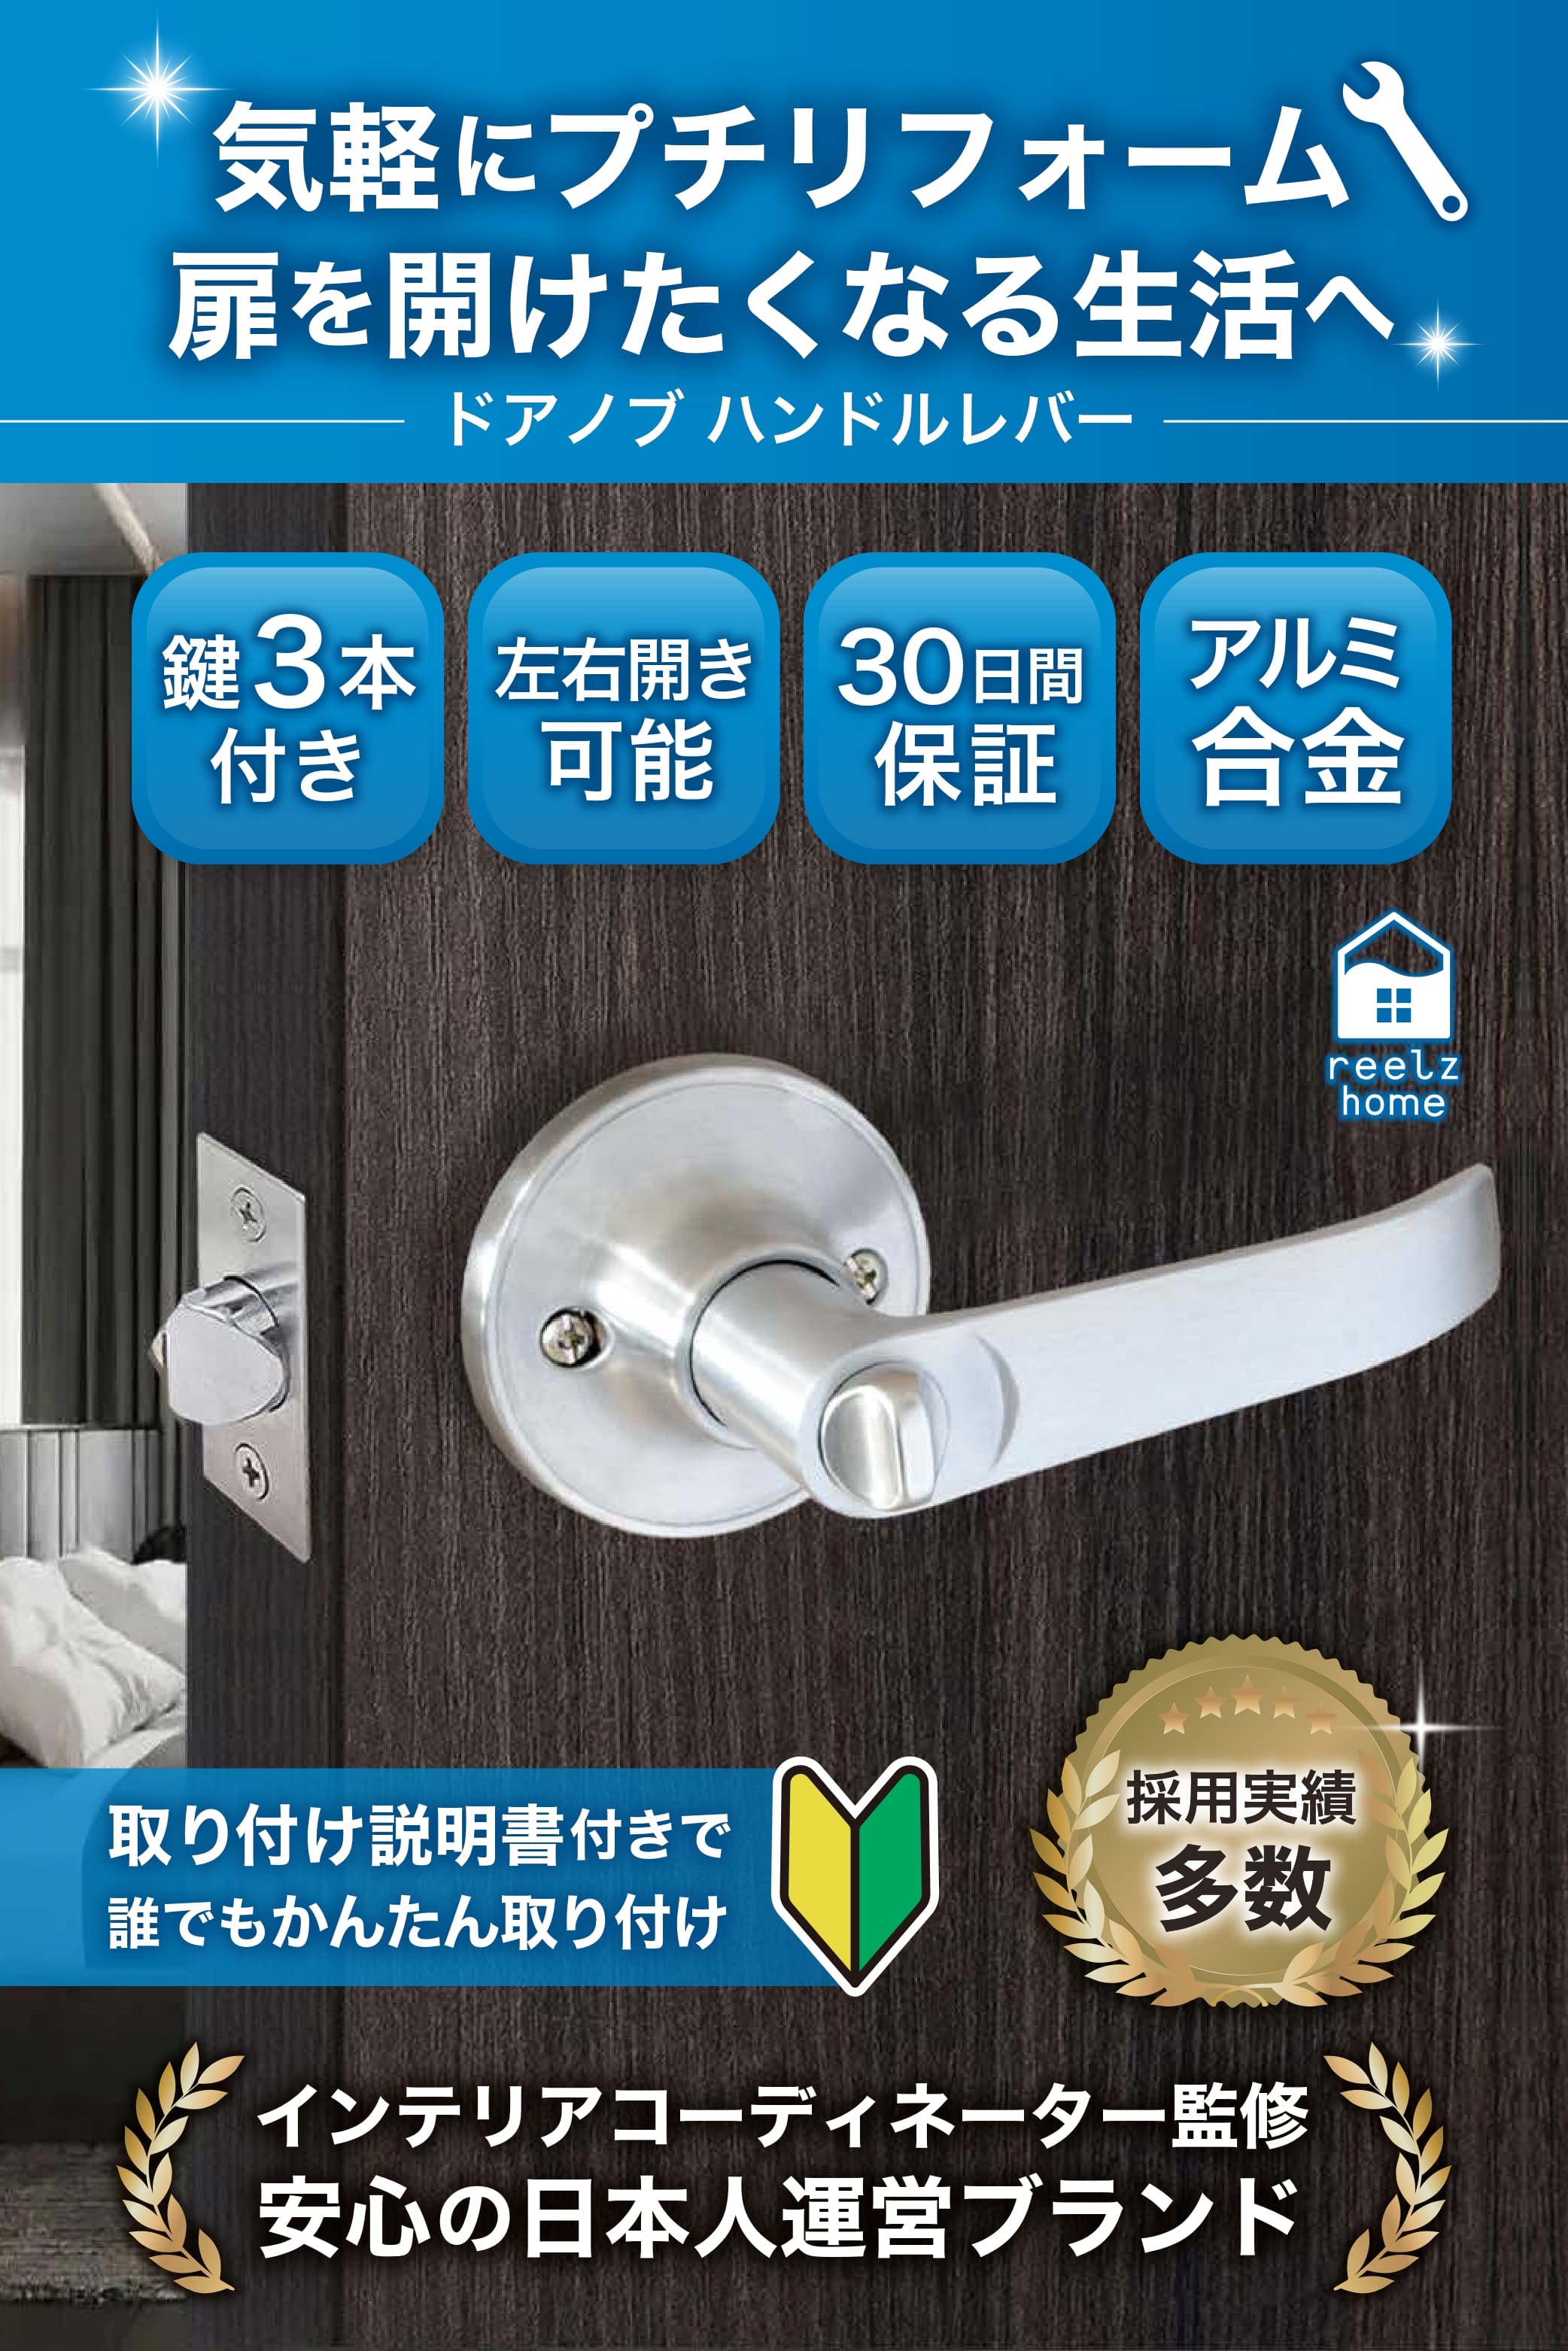  door knob cover key attaching exchange reel z Home [ interior coordinator ..] steering wheel knob lever silver reform DIY